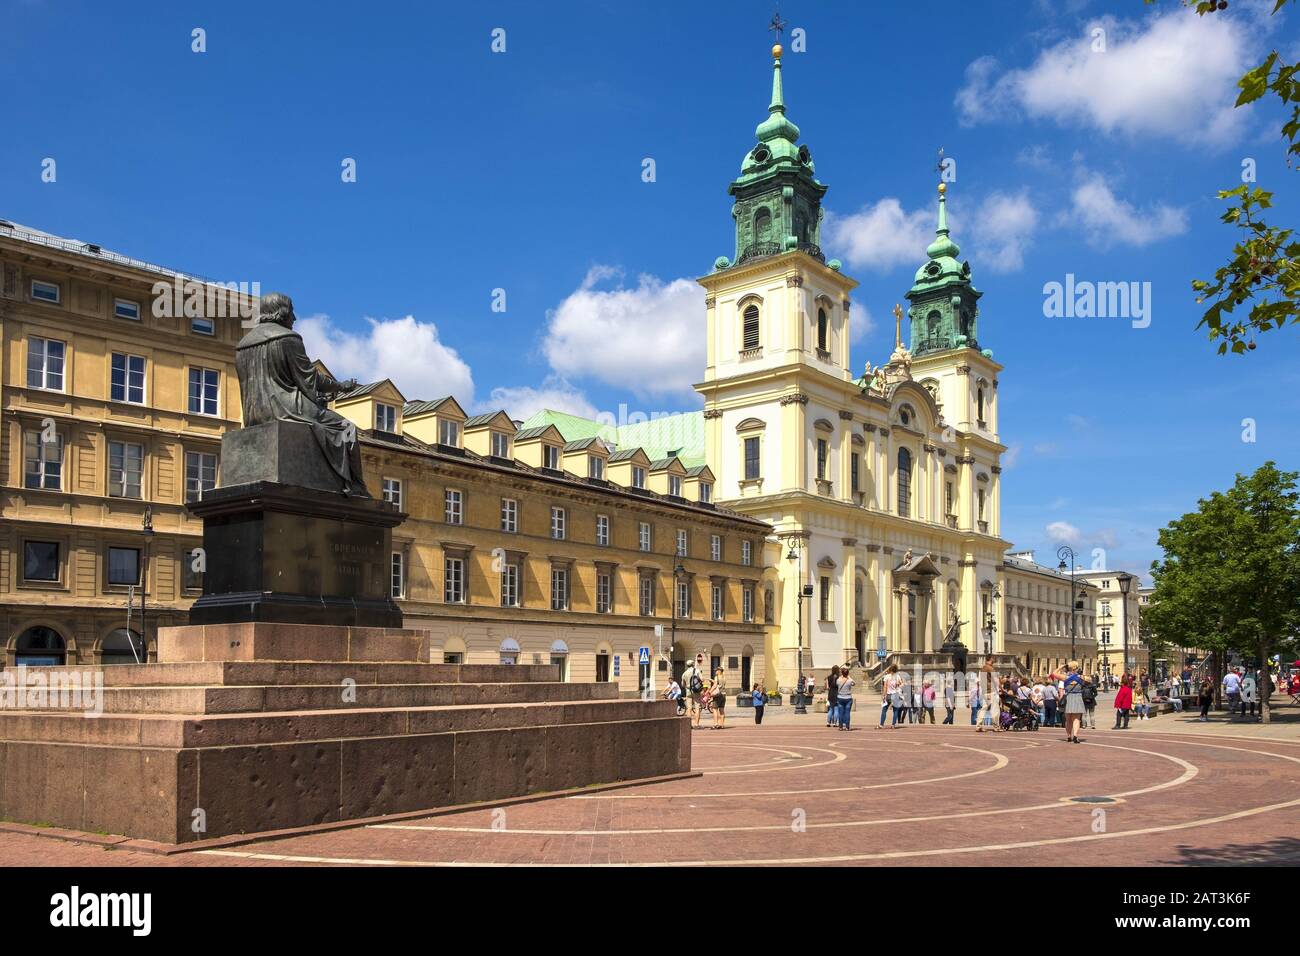 Warsaw, Mazovia / Poland - 2019/06/01: Front view of the baroque Holy Cross Church and the Mikolaj Kopernik statue, at the Krakowskie Przedmiescie street in the Old Town quarter of Warsaw Stock Photo